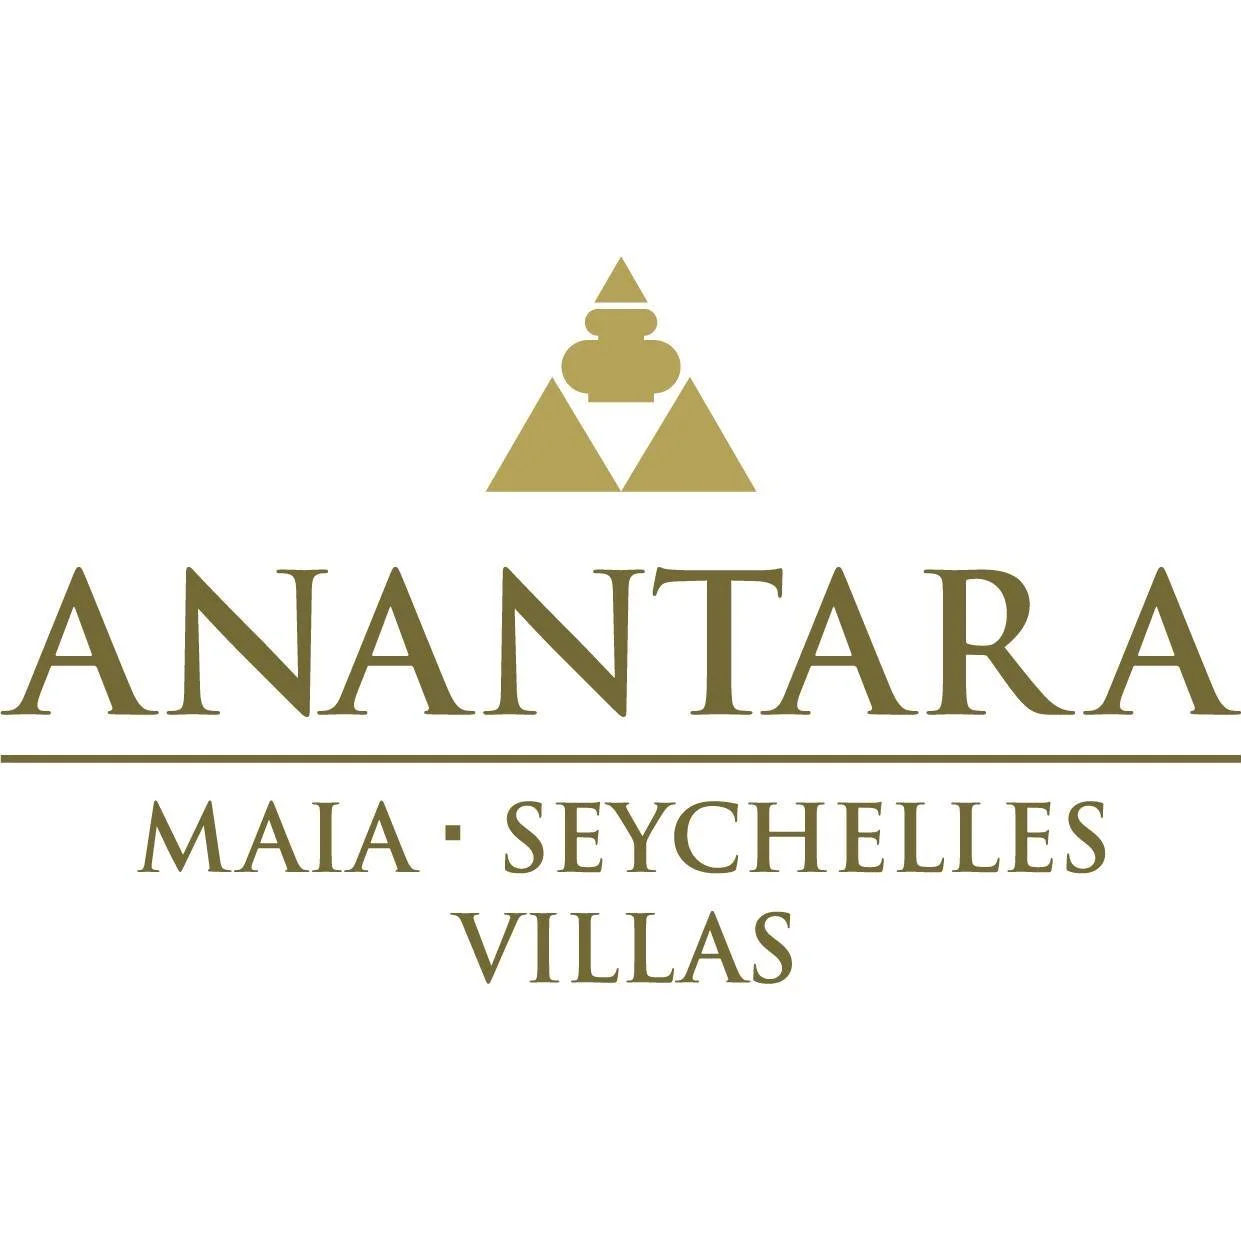 voyages-de-luxe-hotels-logo-anantara-maia-seychelles-villlas